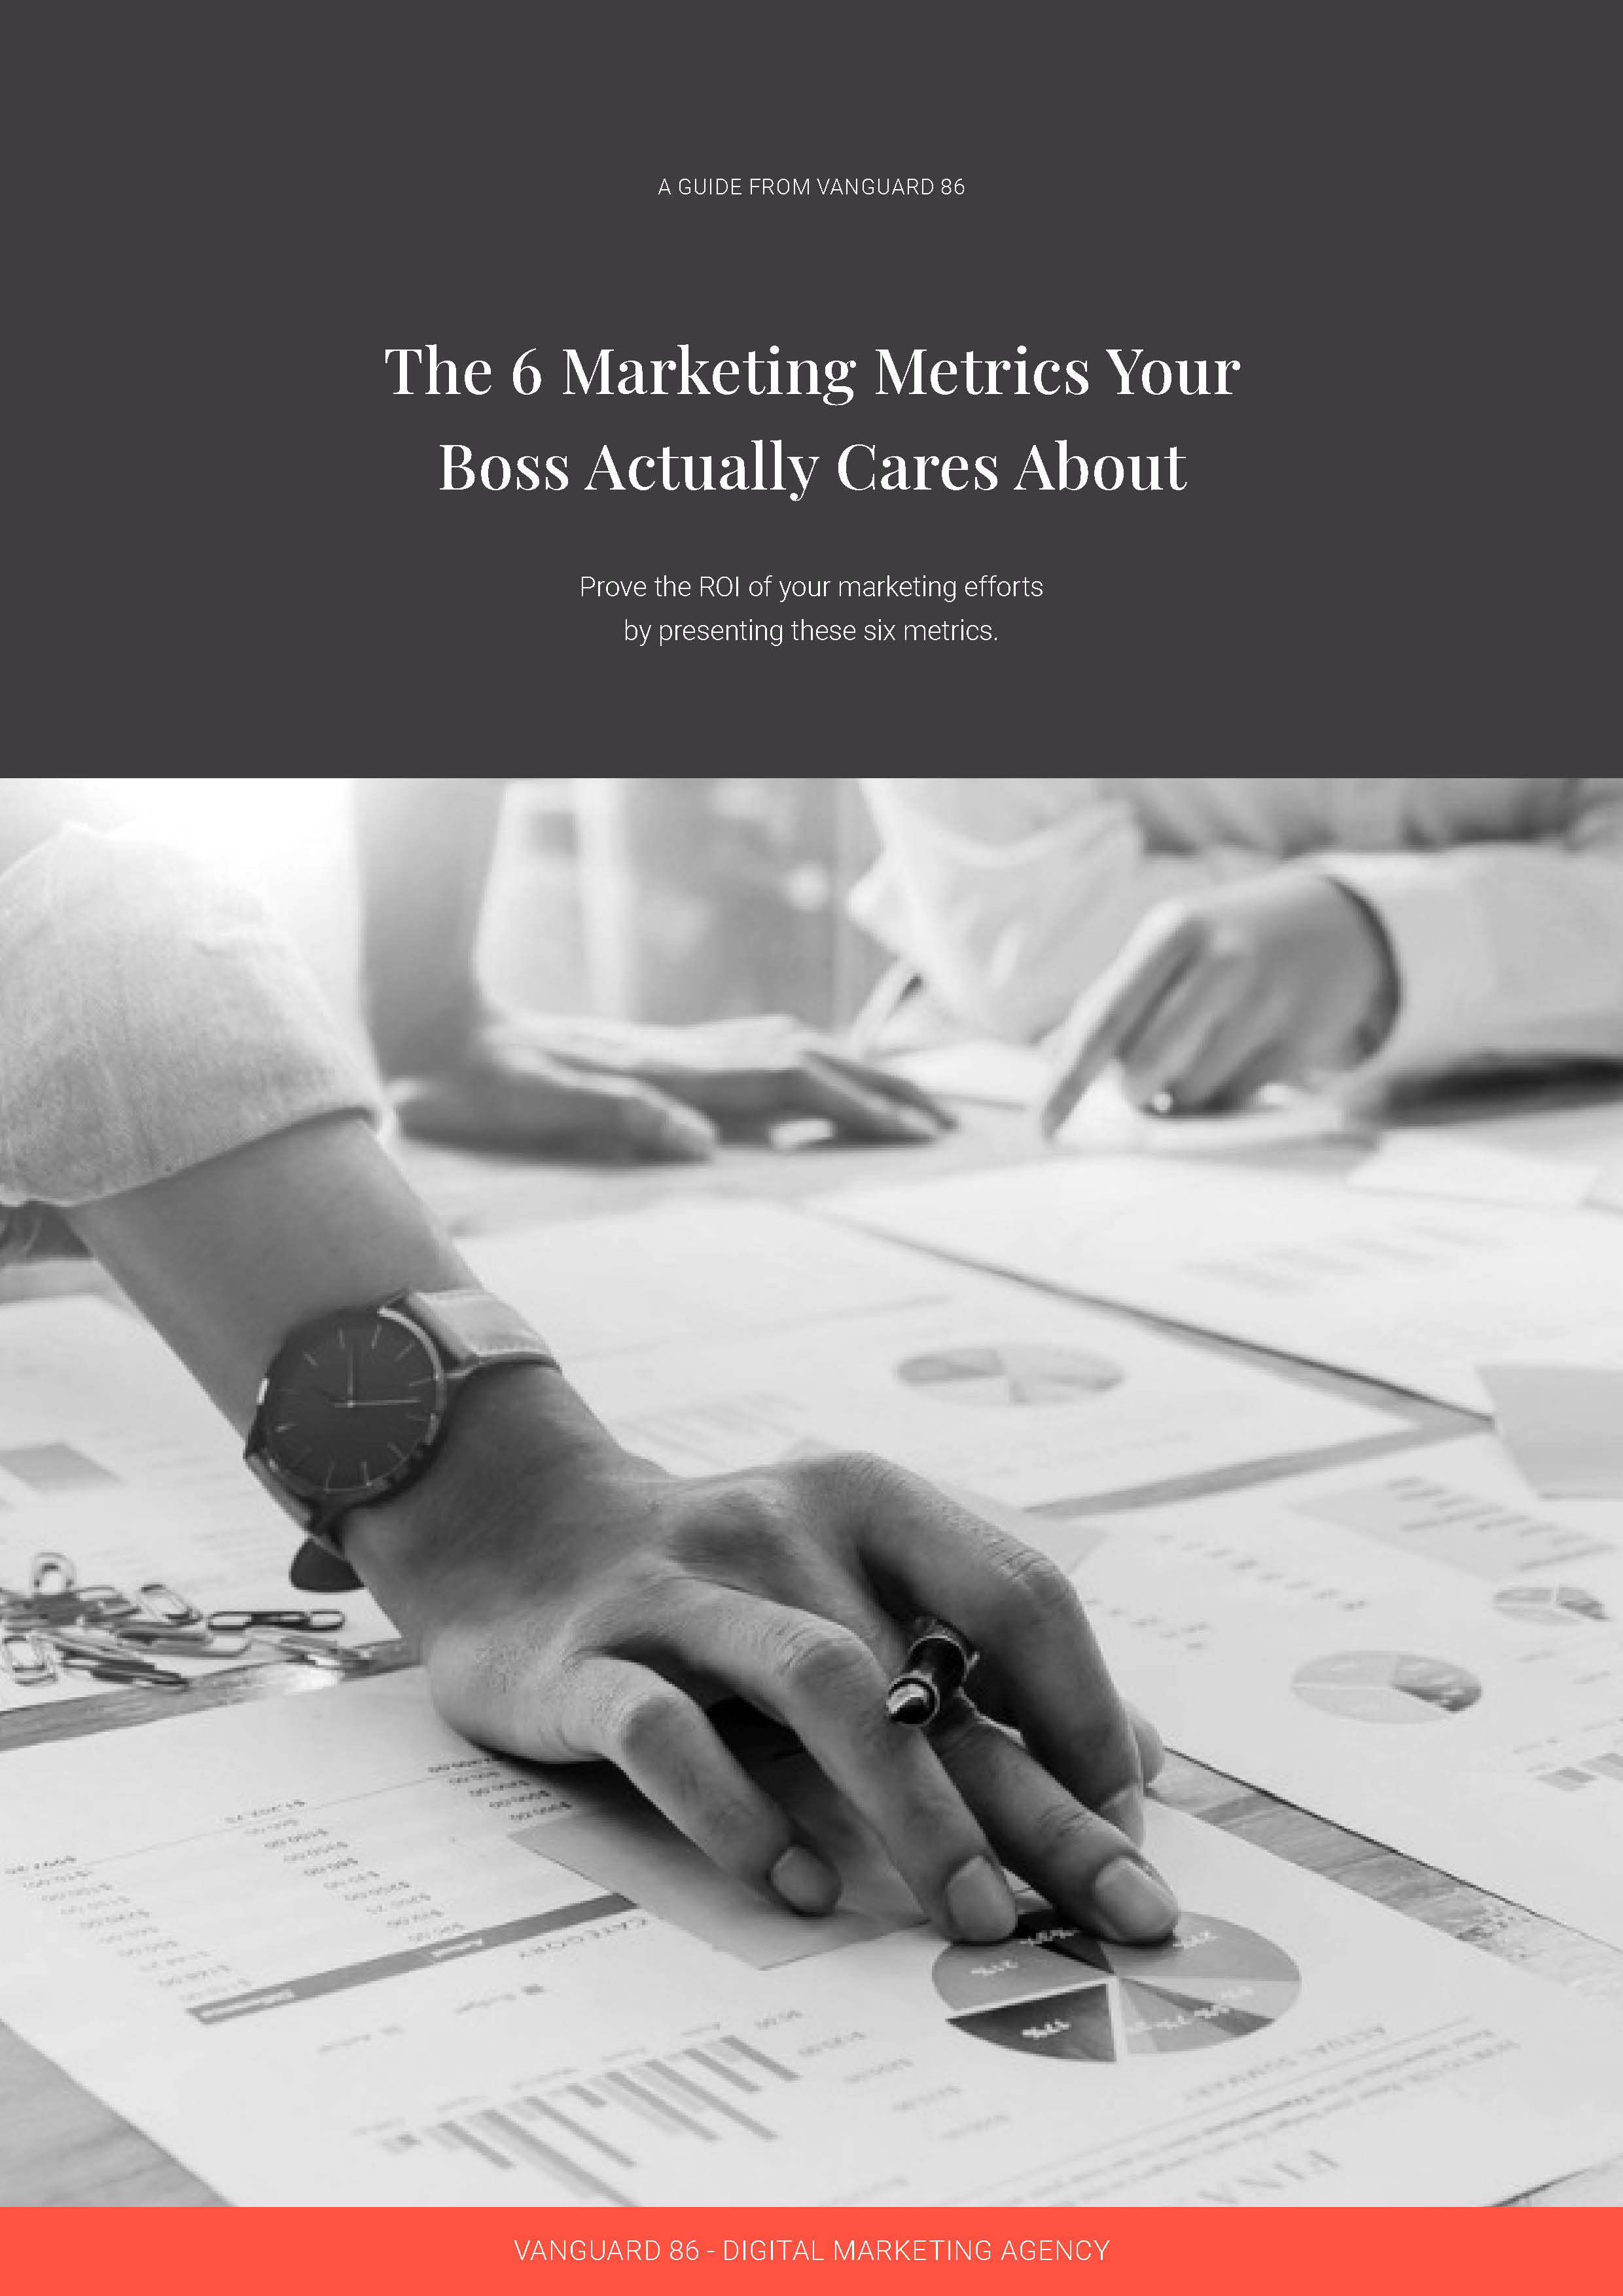 Marketing metrics you should report on